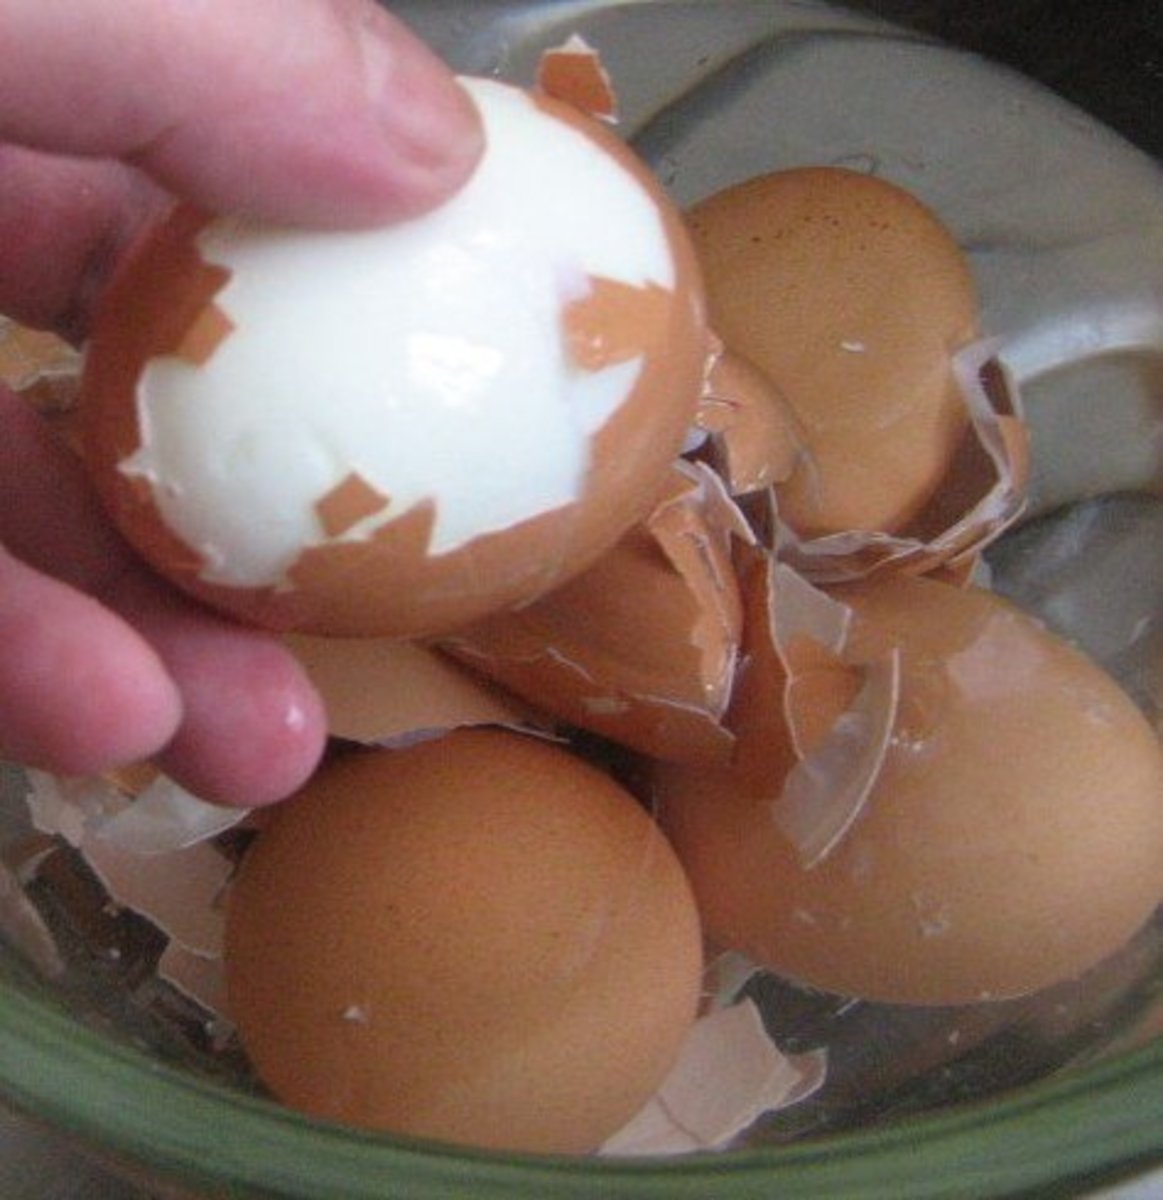 Peel the boiled eggs